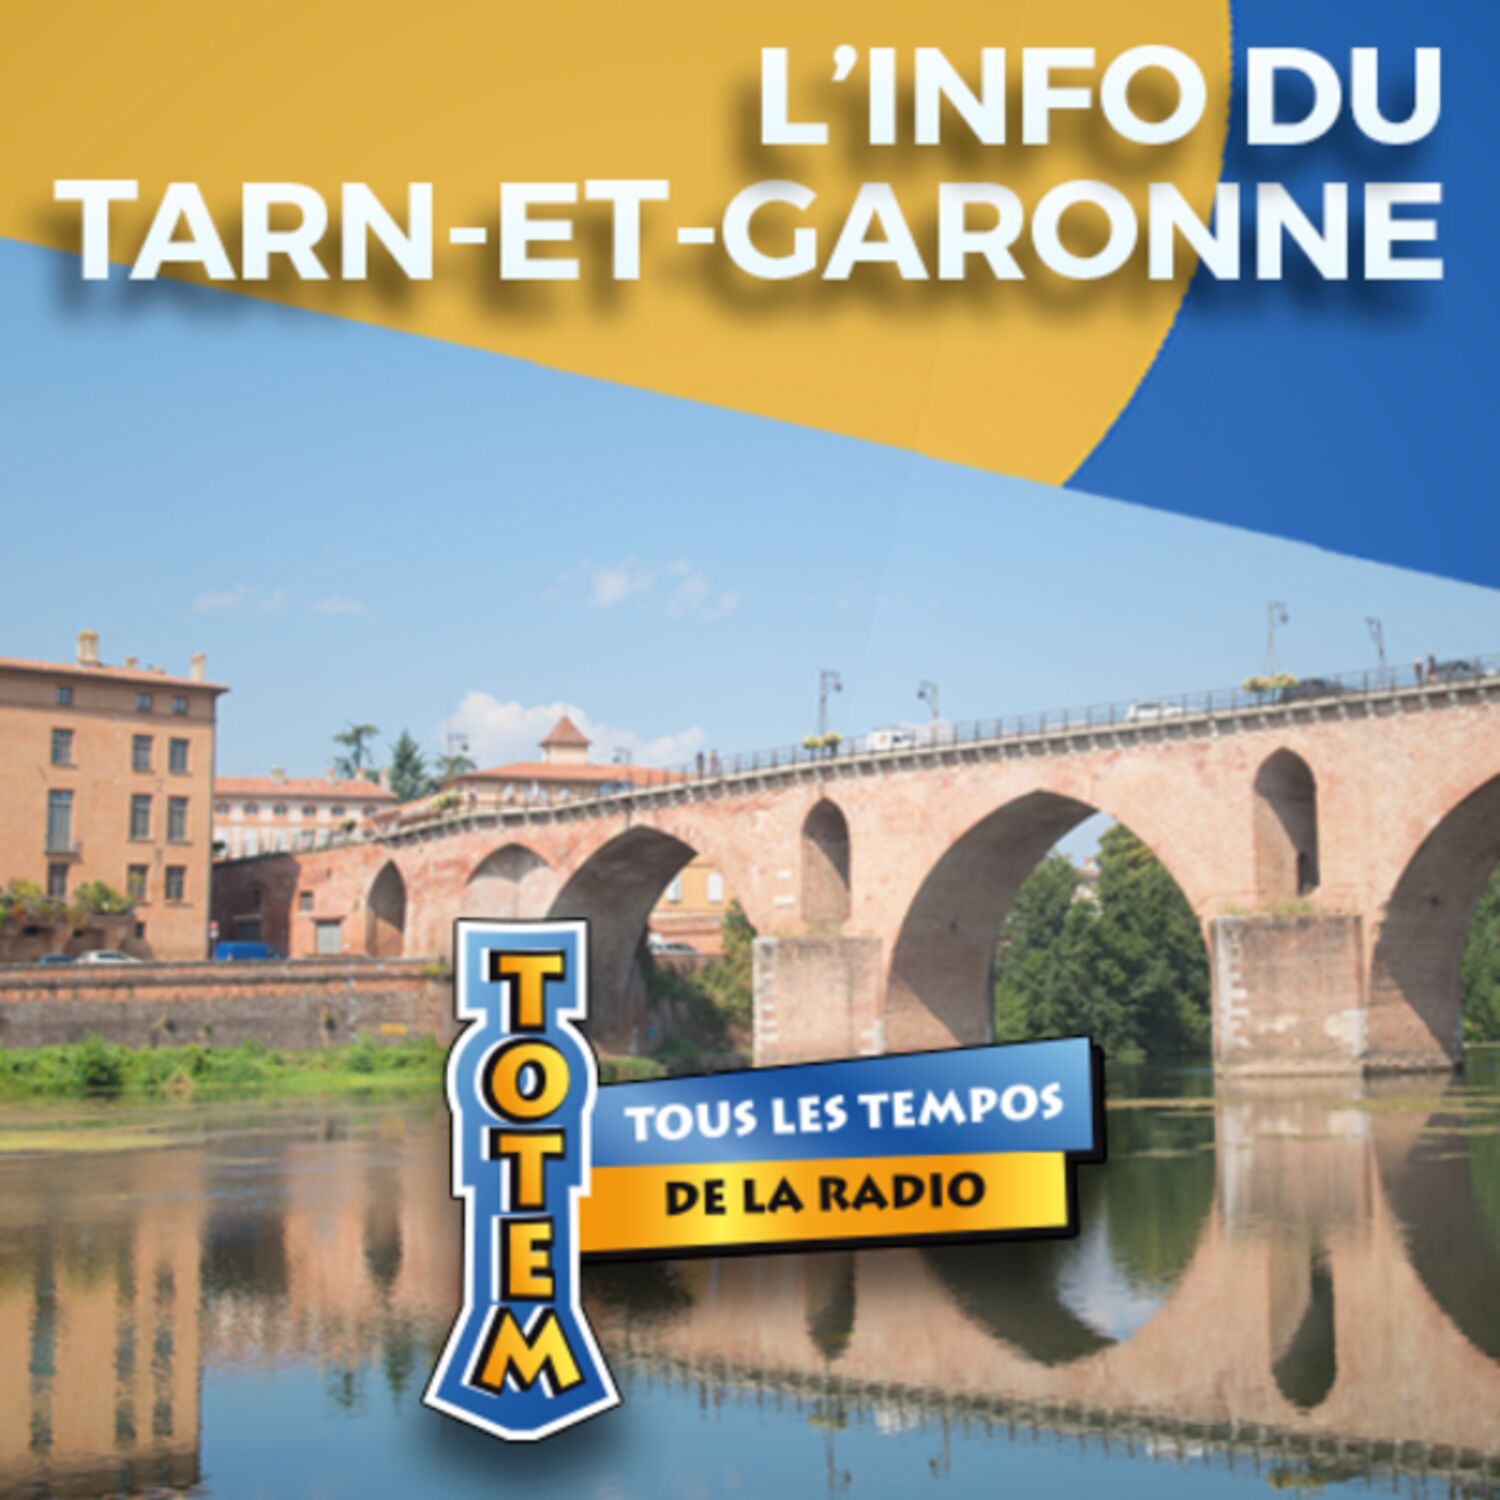 L'info du Tarn-et-Garonne du 26/05/23 à 08h30